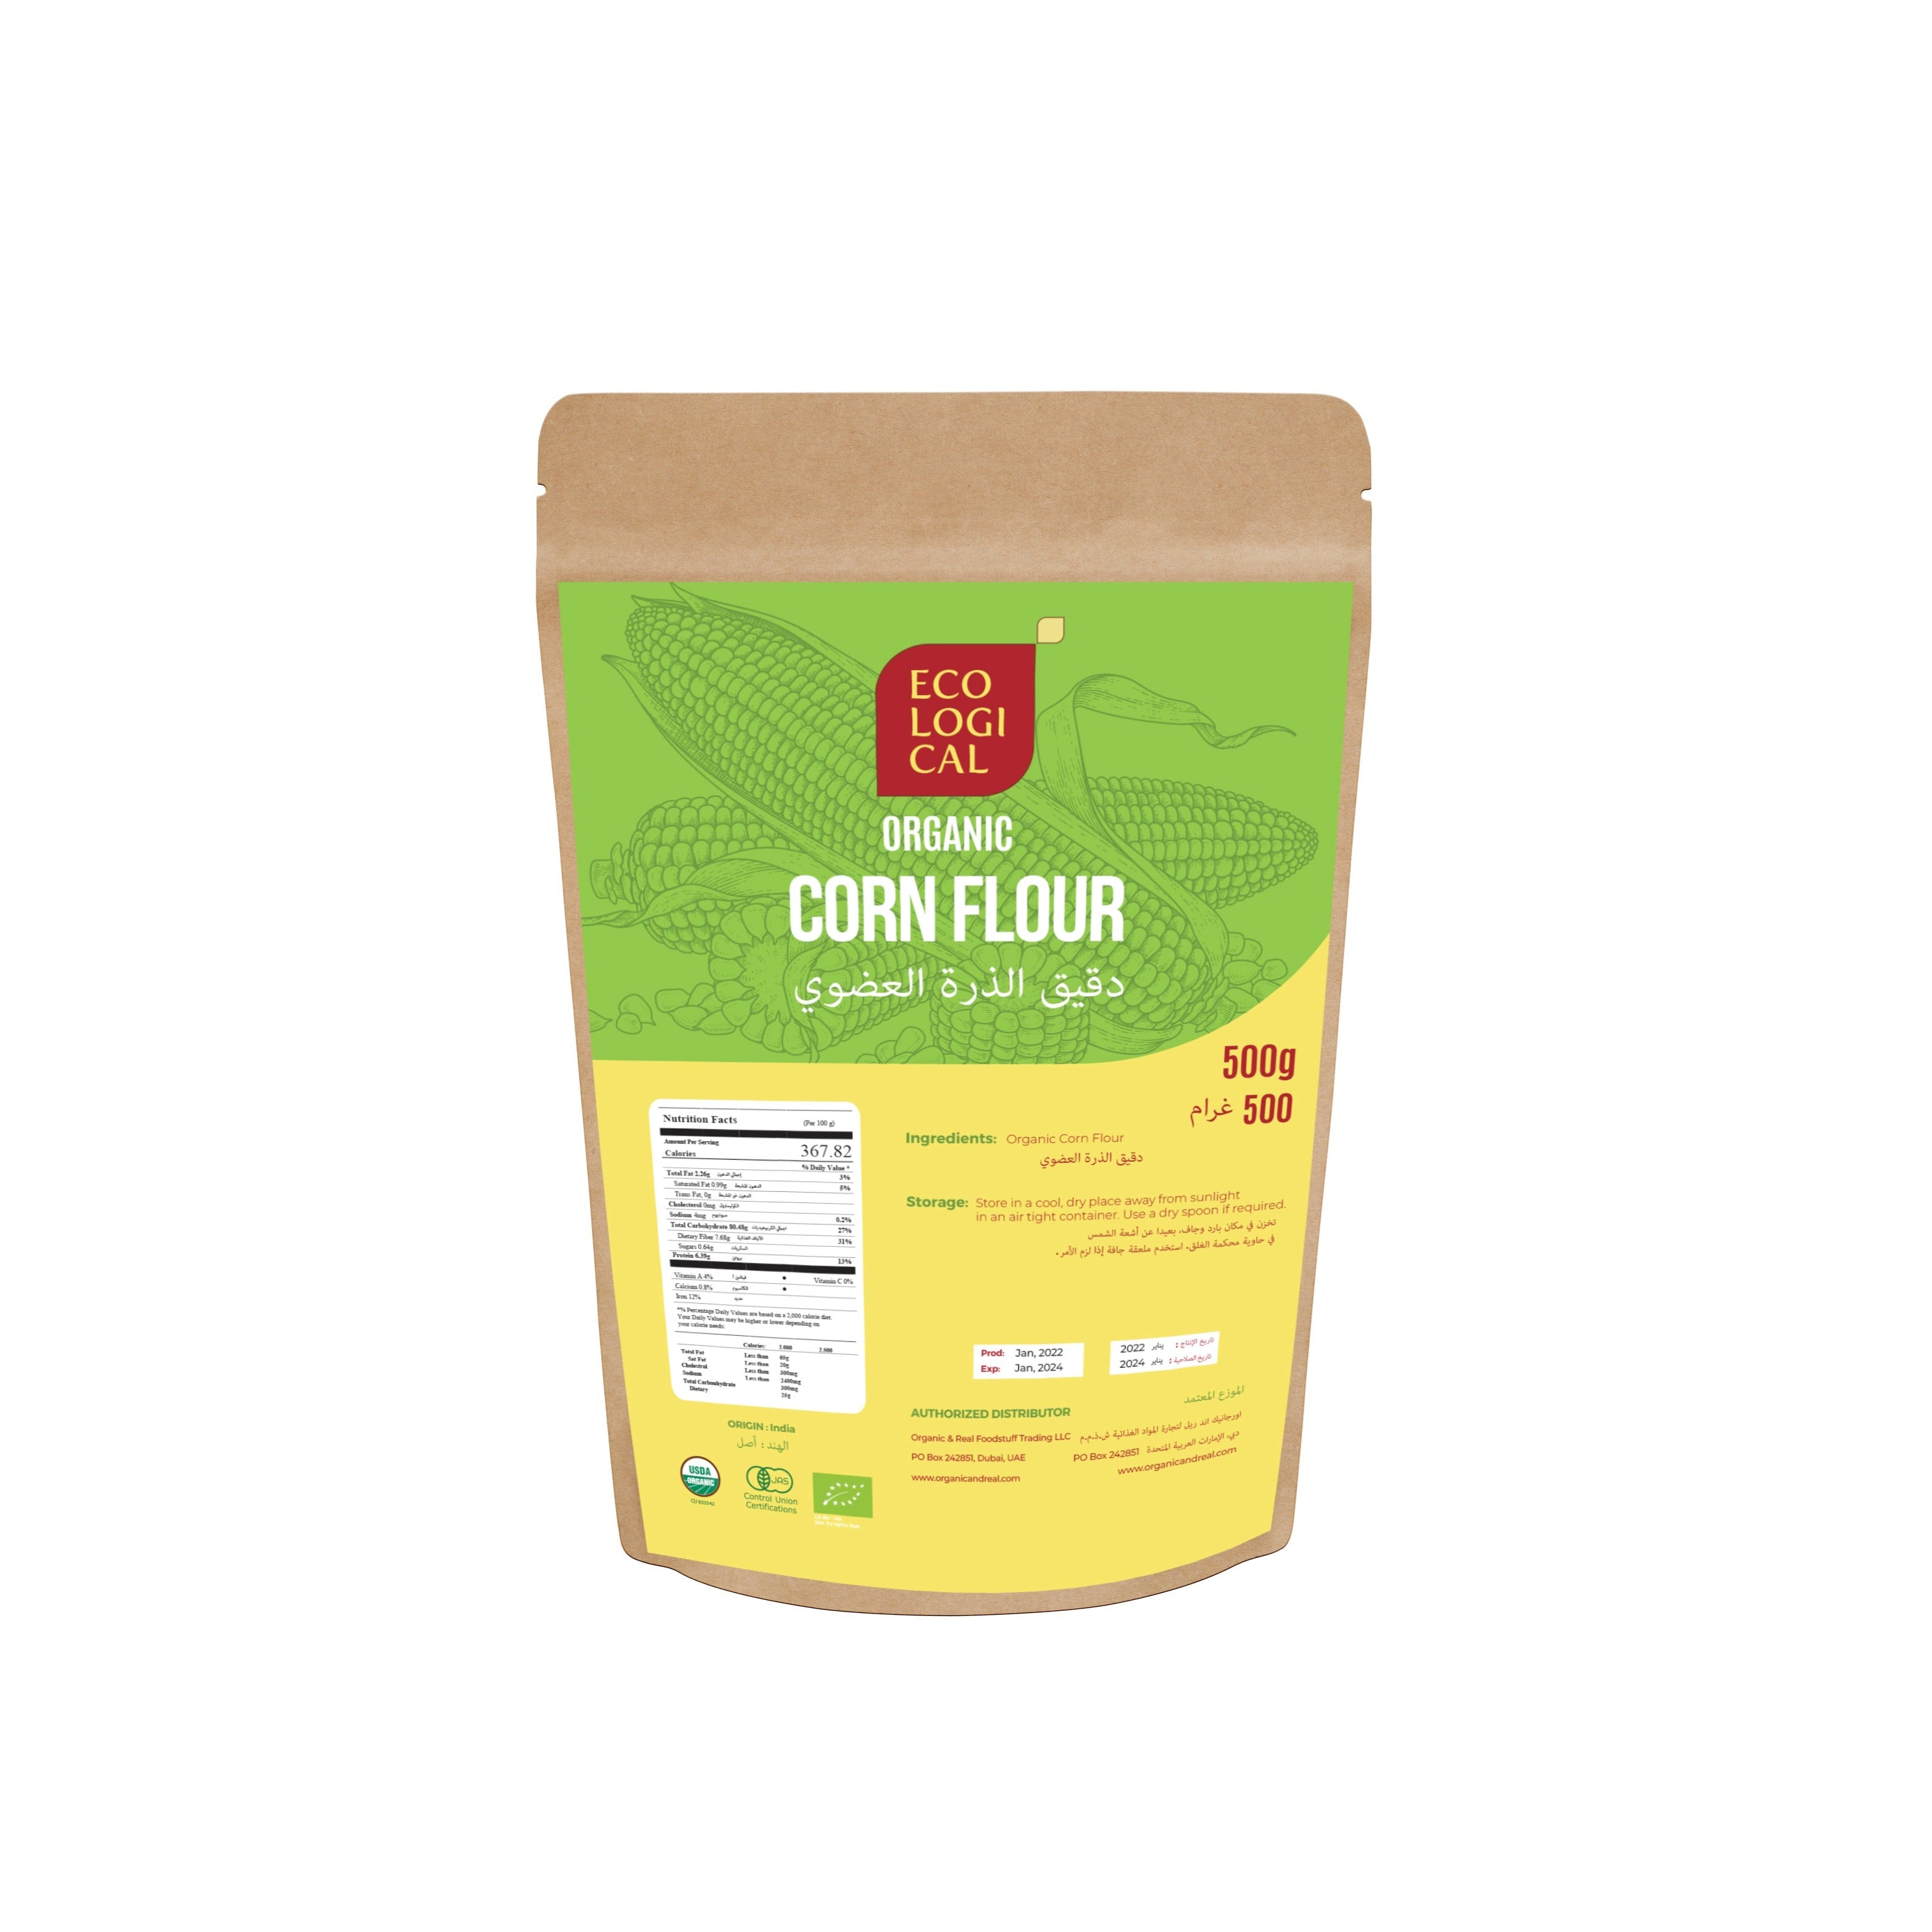 ECOLOGICAL Organic Corn Flour, 500g